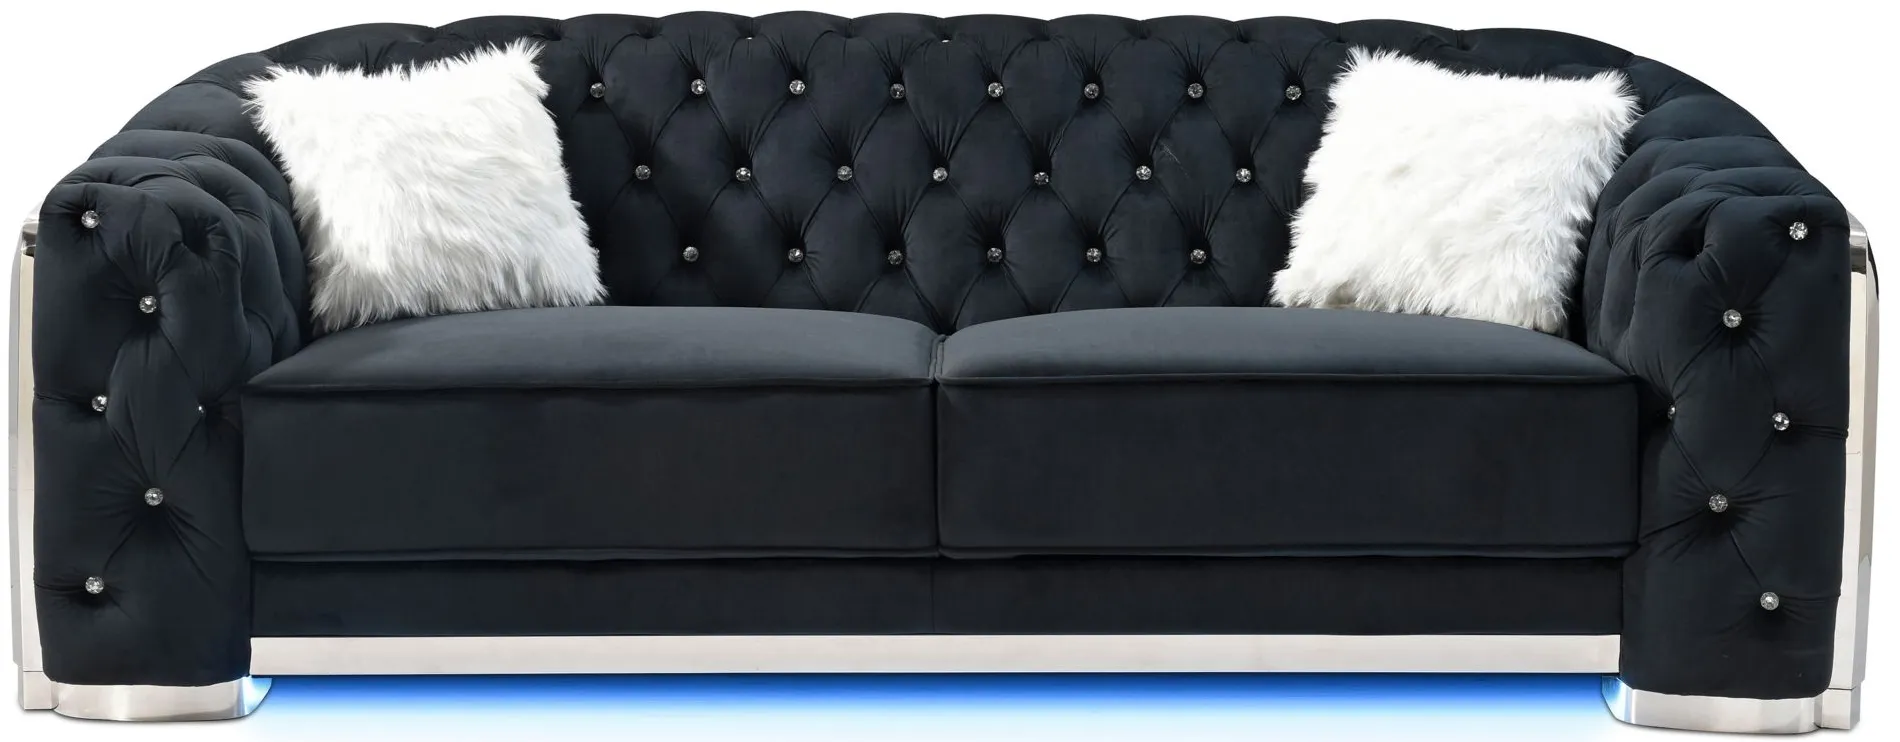 Sapphire Sofa in Black by Glory Furniture